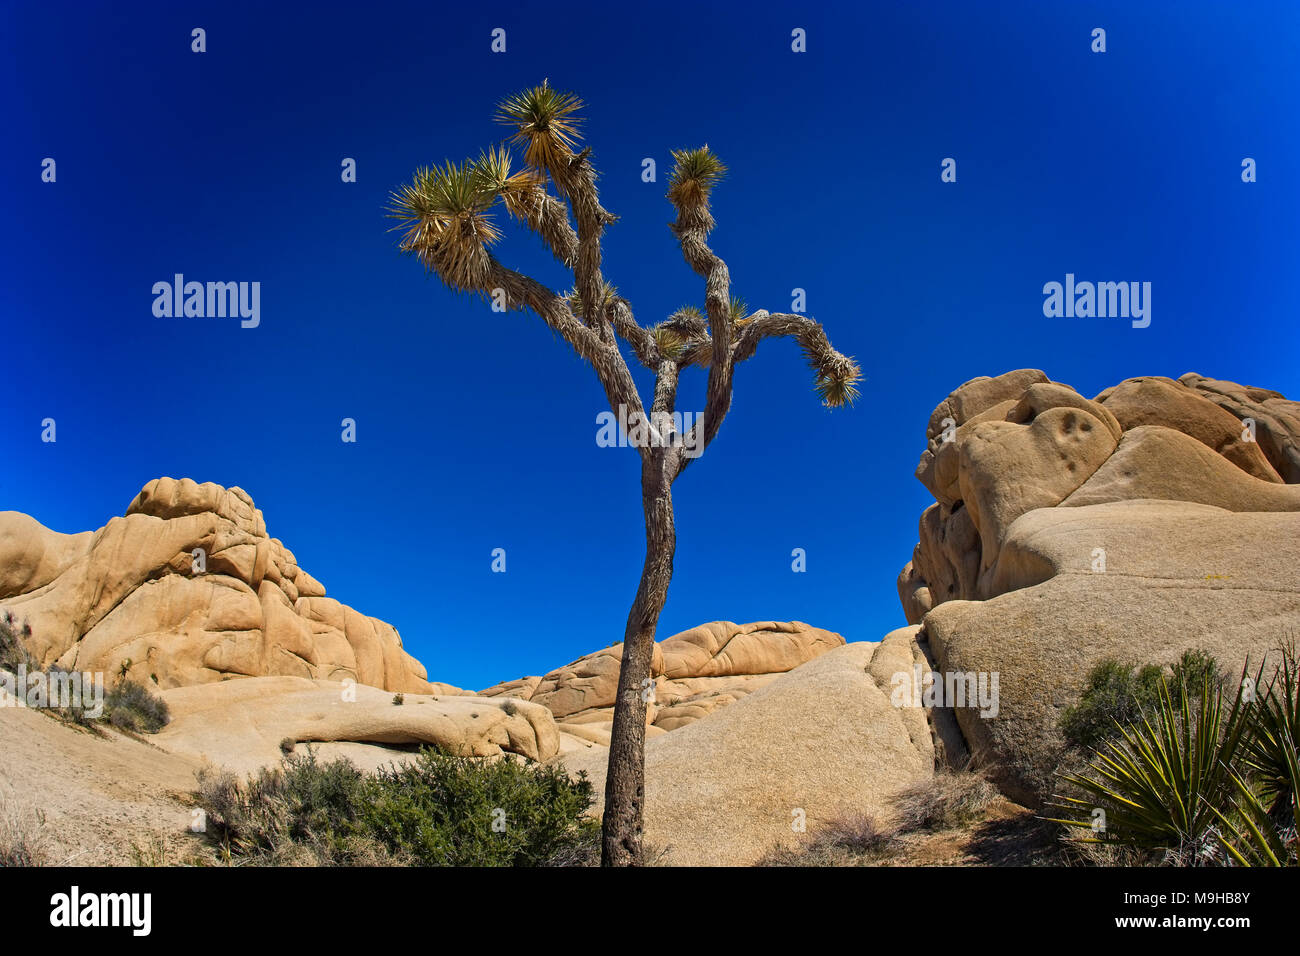 Single Joshua tree next to rock formations in Joshua Tree National Park in Southern California's Mojave Desert Stock Photo